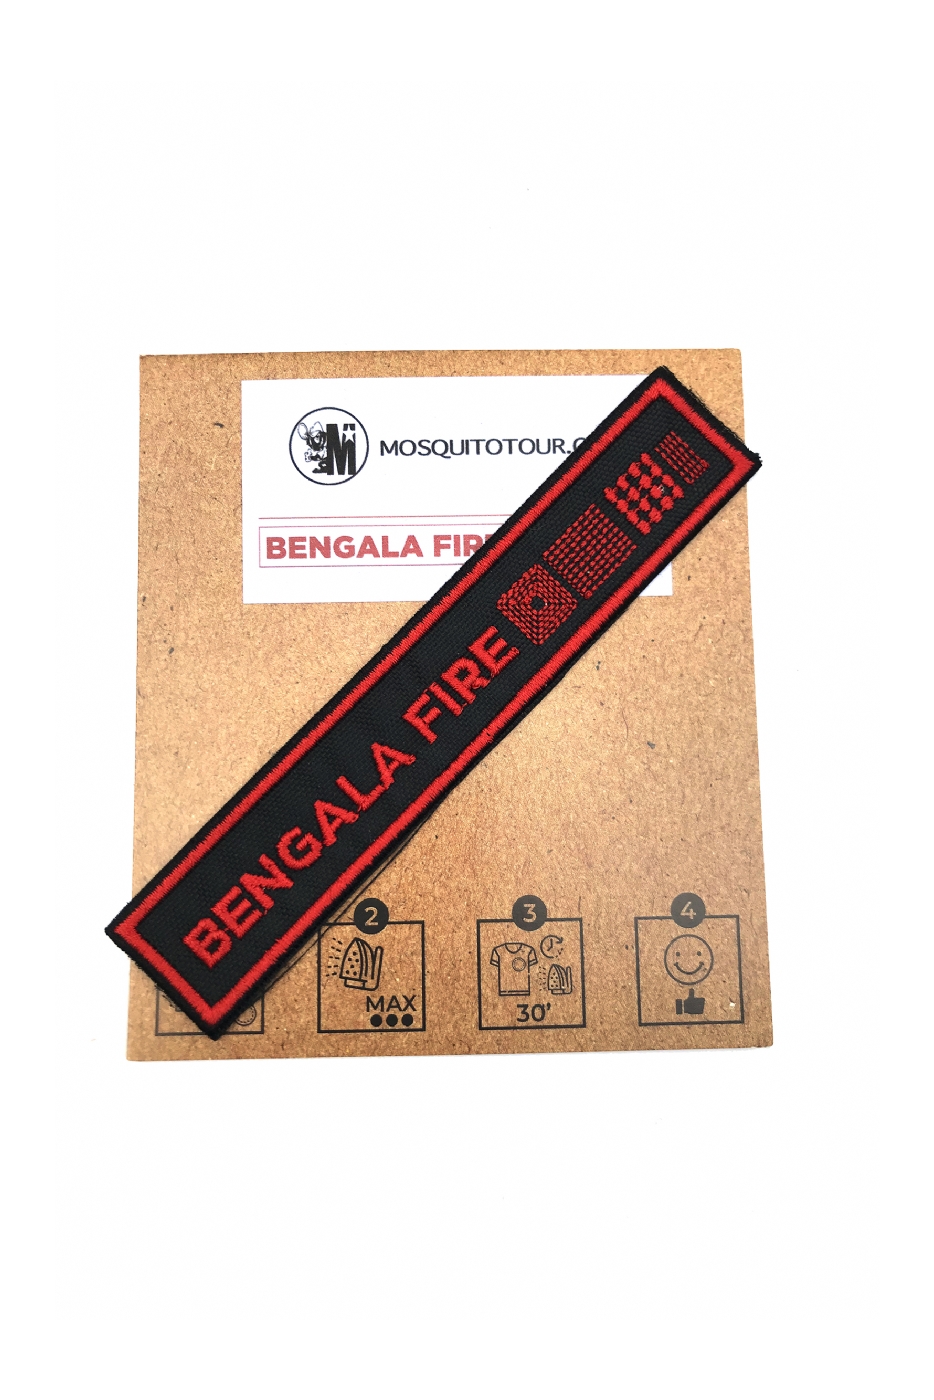 Toppa termoadesiva BF, Bengala Fire - MosquitoTour